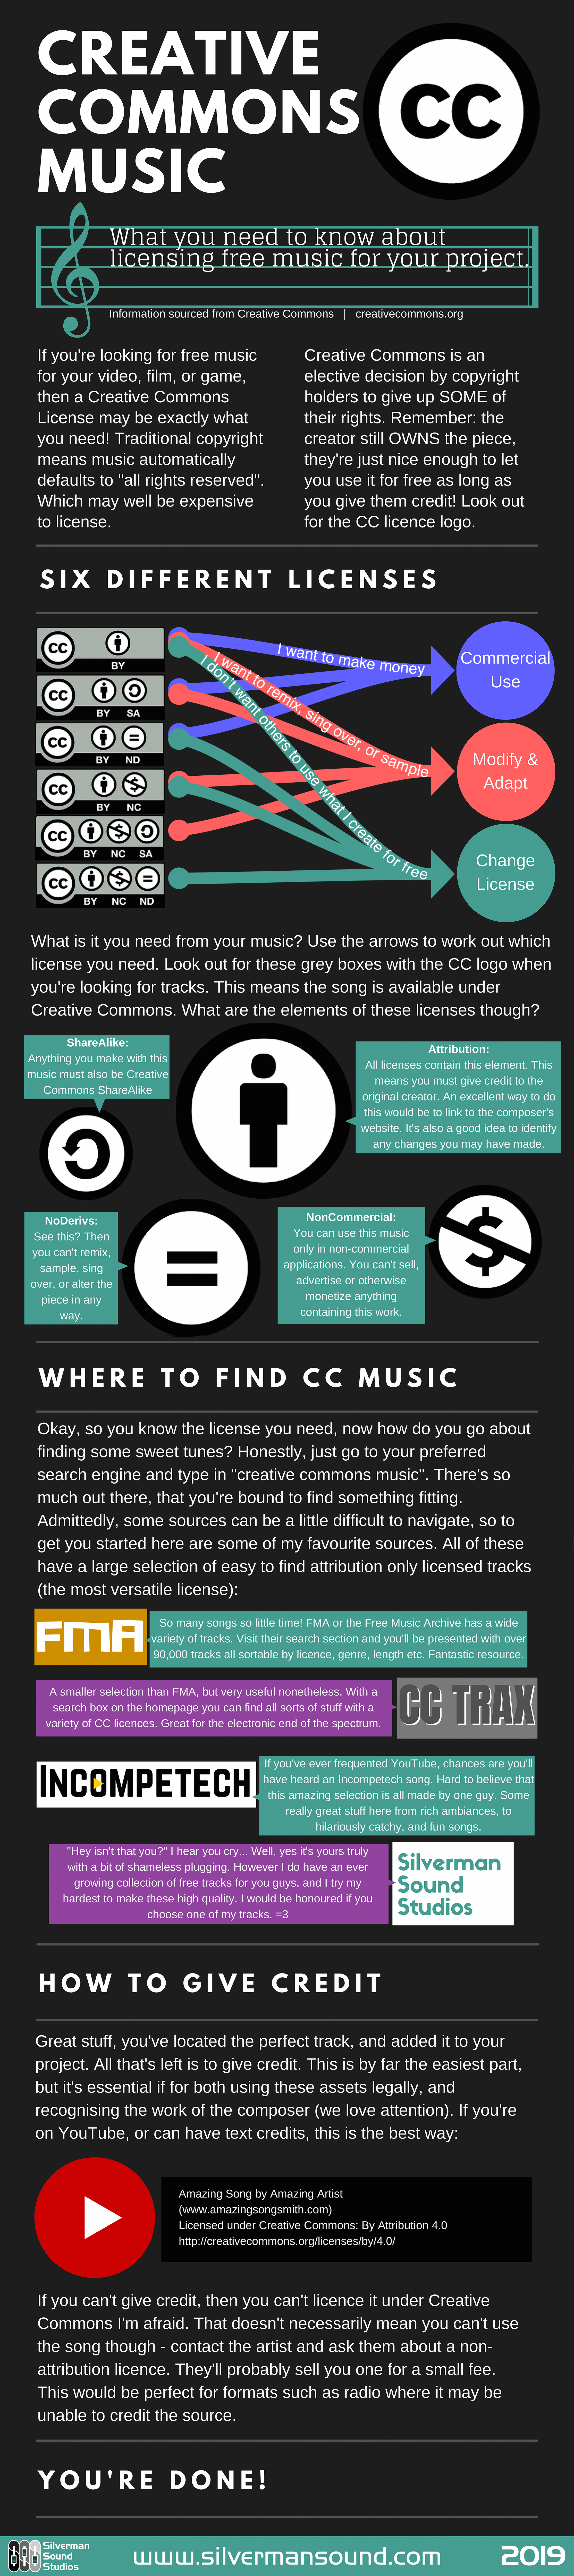 Creative Commons Music Infographic